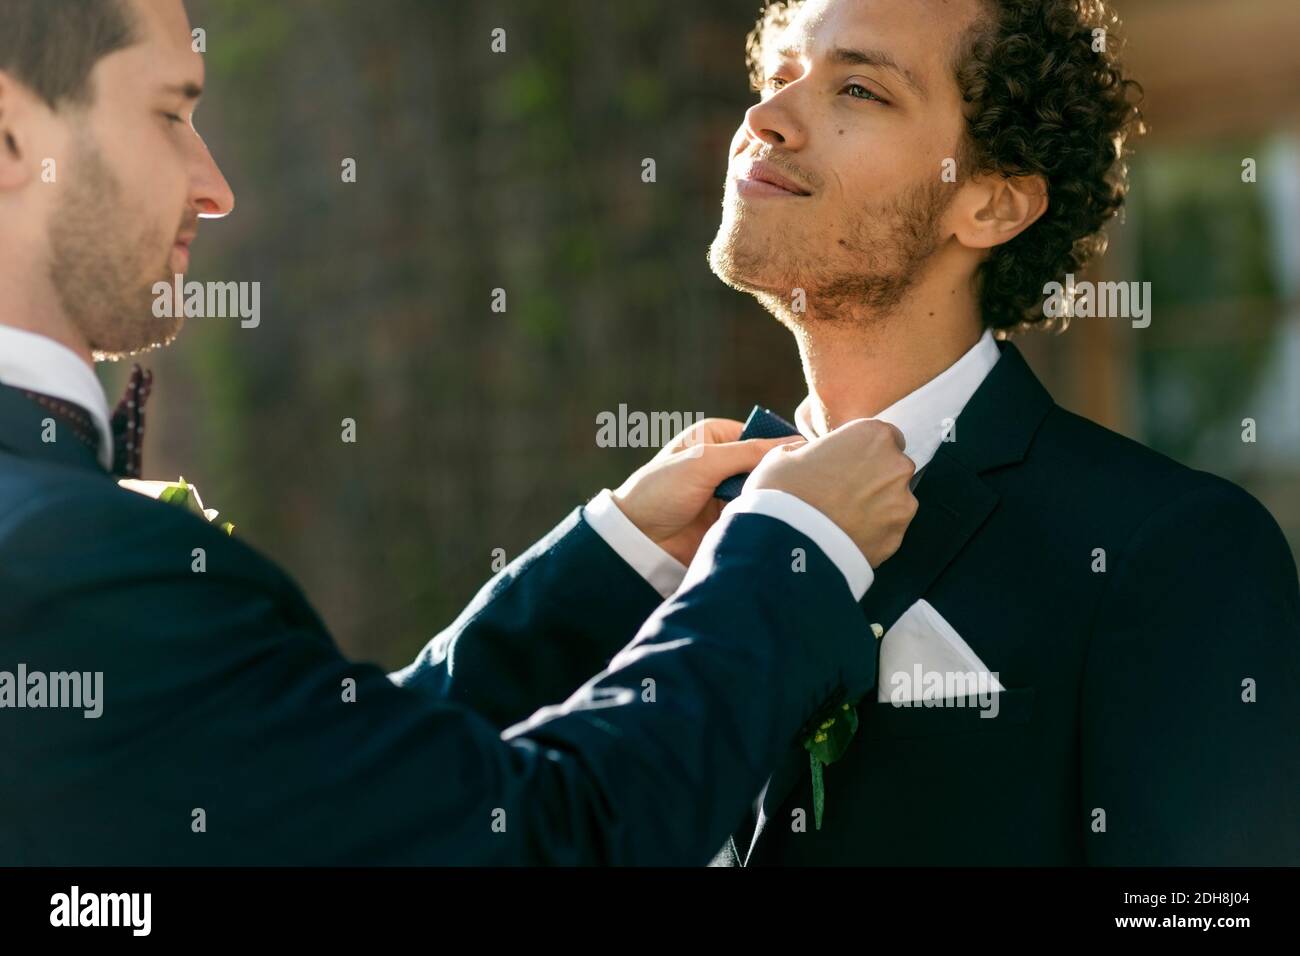 Newlywed man adjusting bow tie of gay partner Stock Photo